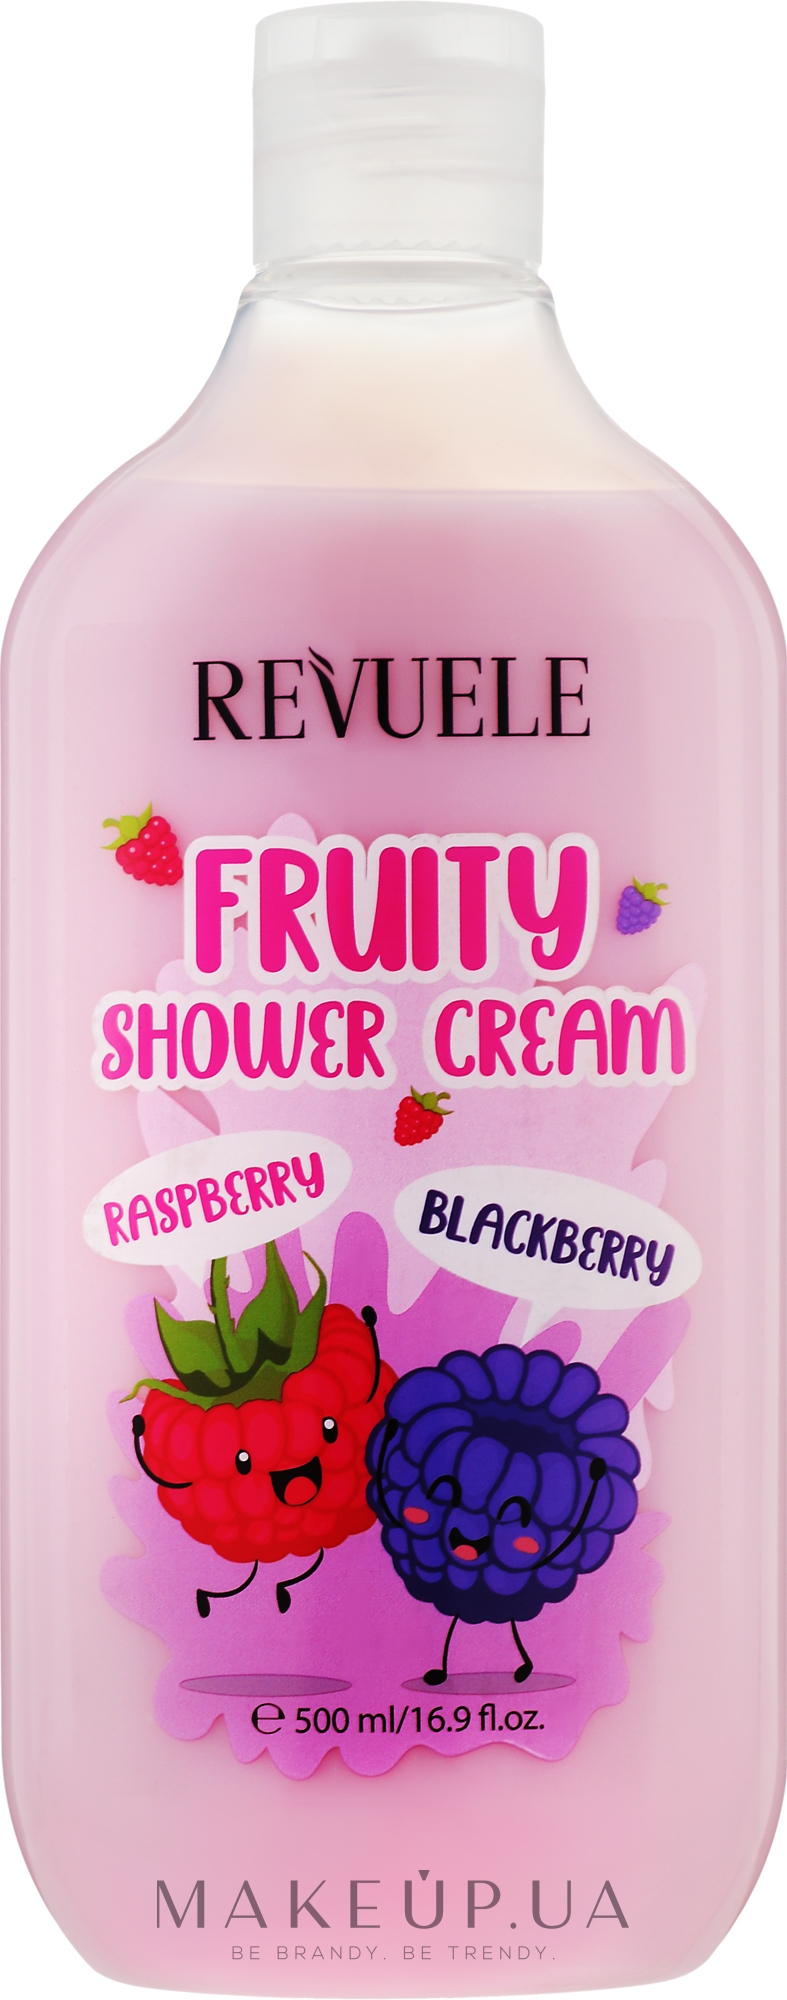 Крем для душа с малиной и ежевикой - Revuele Fruity Shower Cream Raspberry and Blackberry — фото 500ml